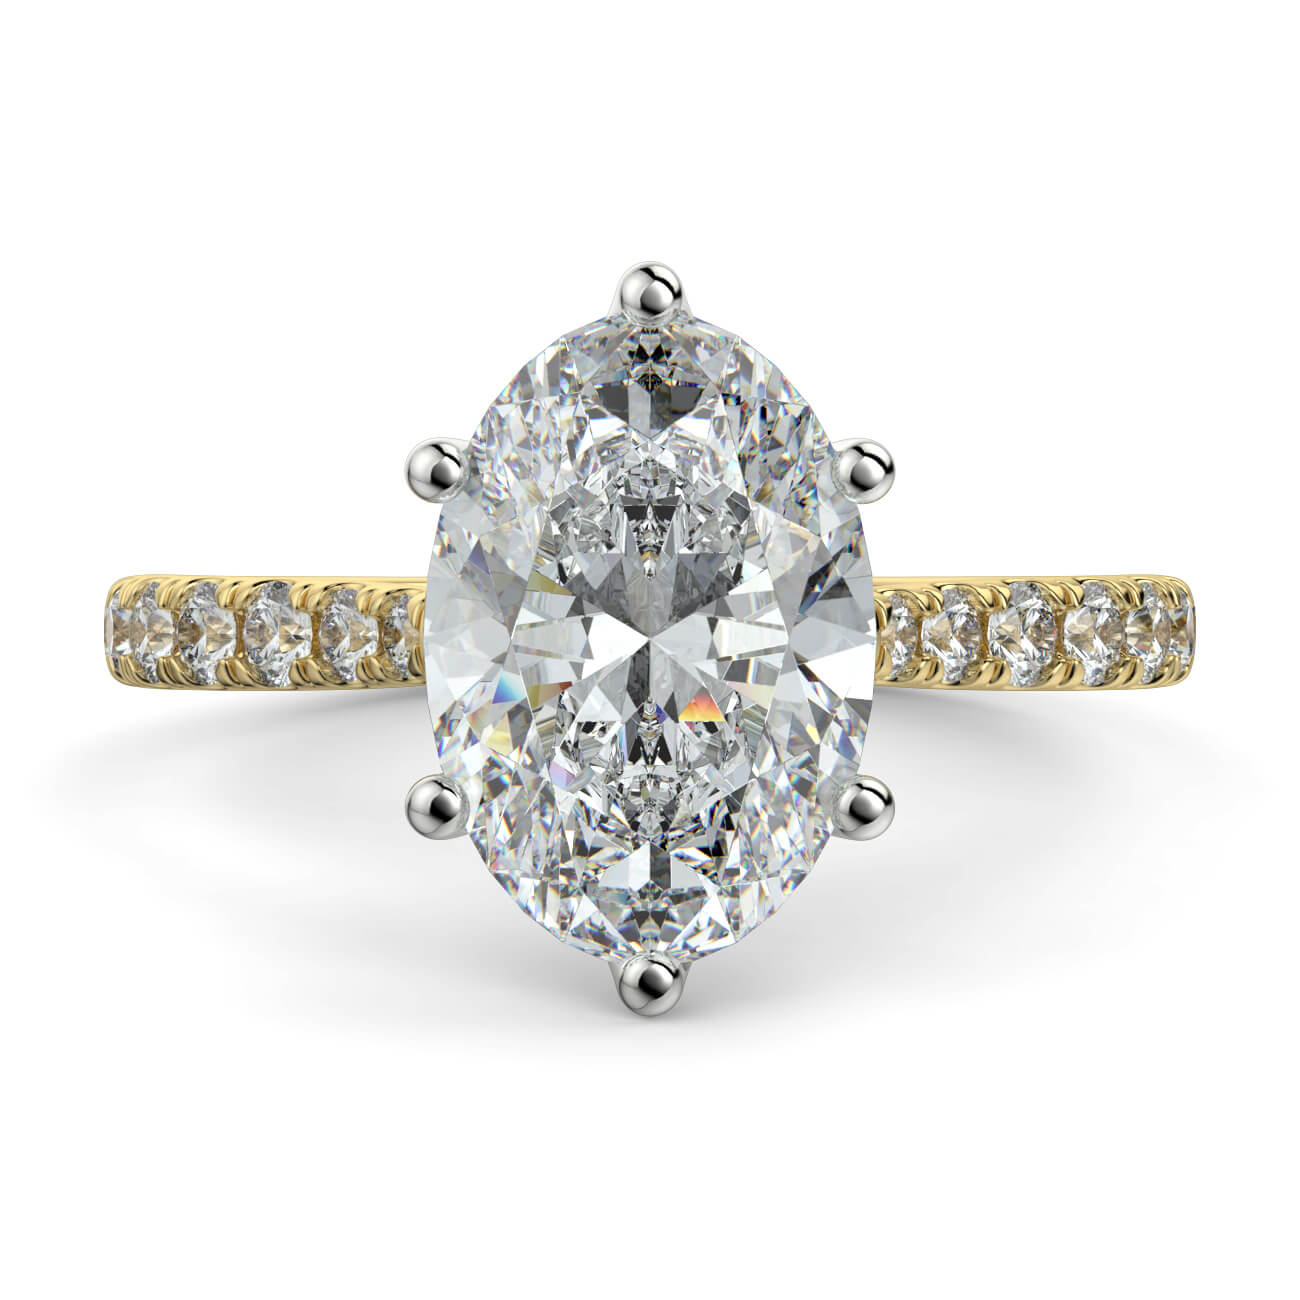 Tulip Basket Diamond Engagement Ring in 18k Yellow Gold and White Gold – Australian Diamond Network